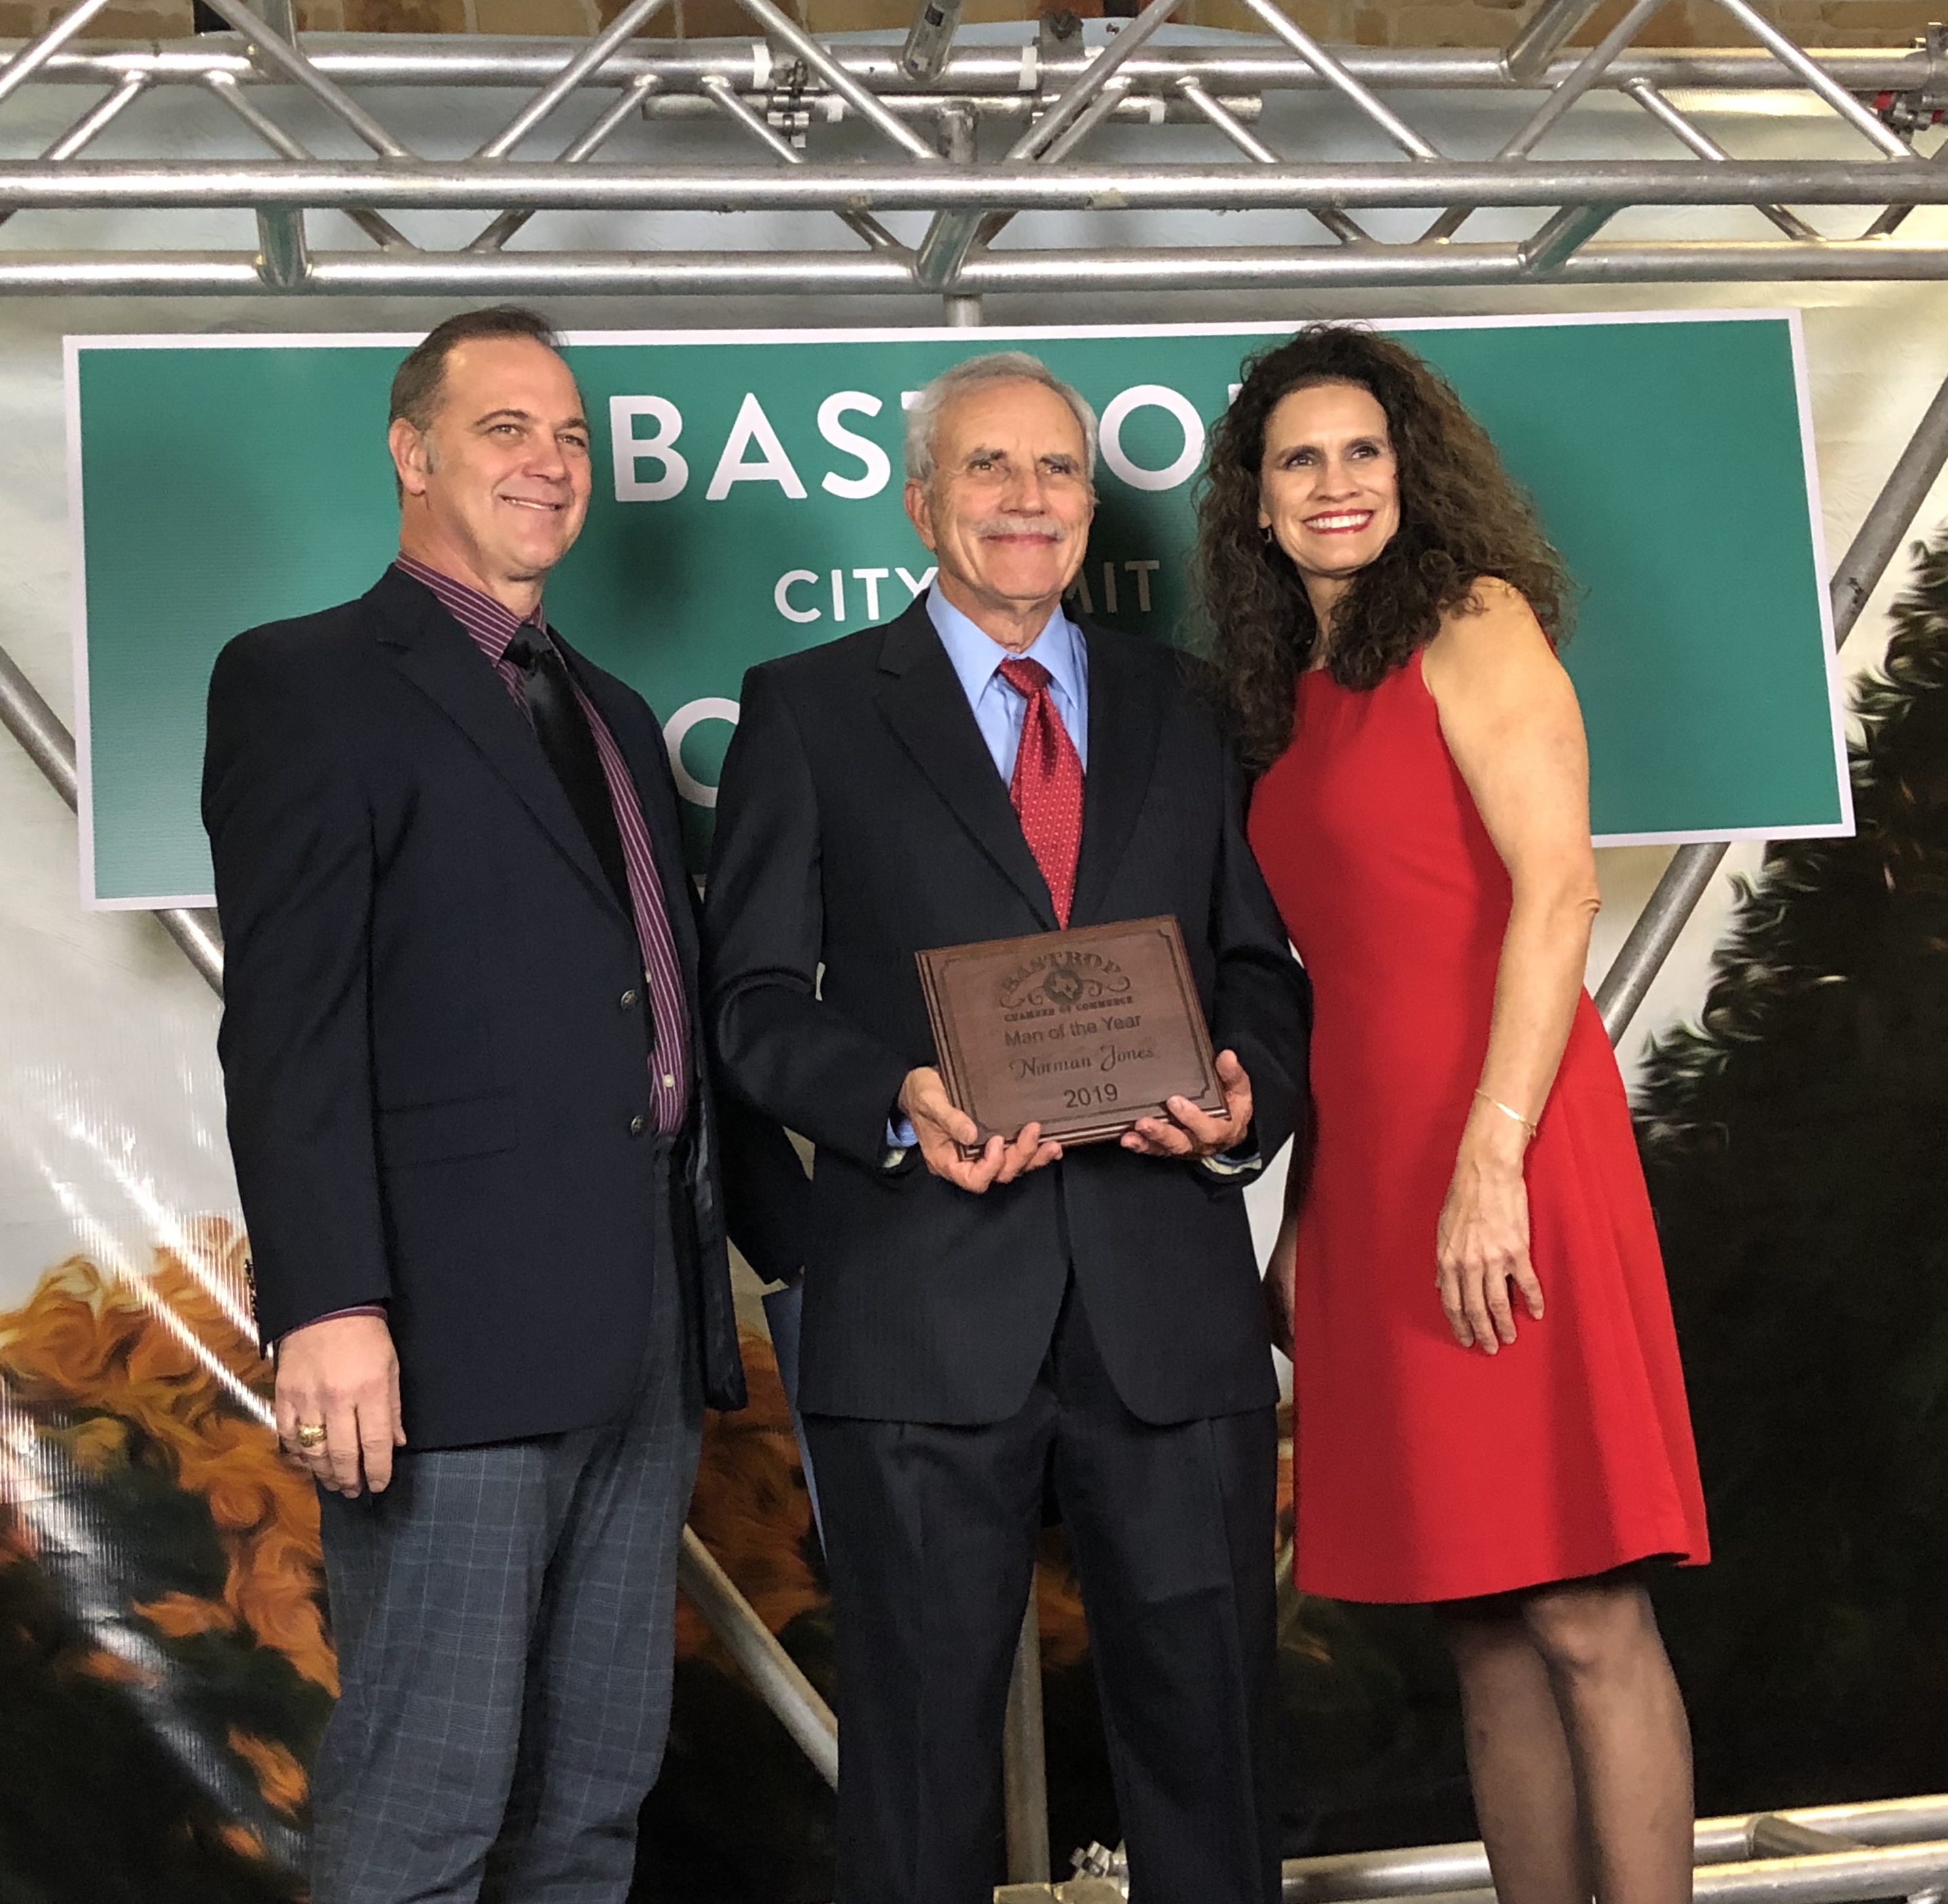 Bastrop Chamber award winners announced at banquet Elgin Courier